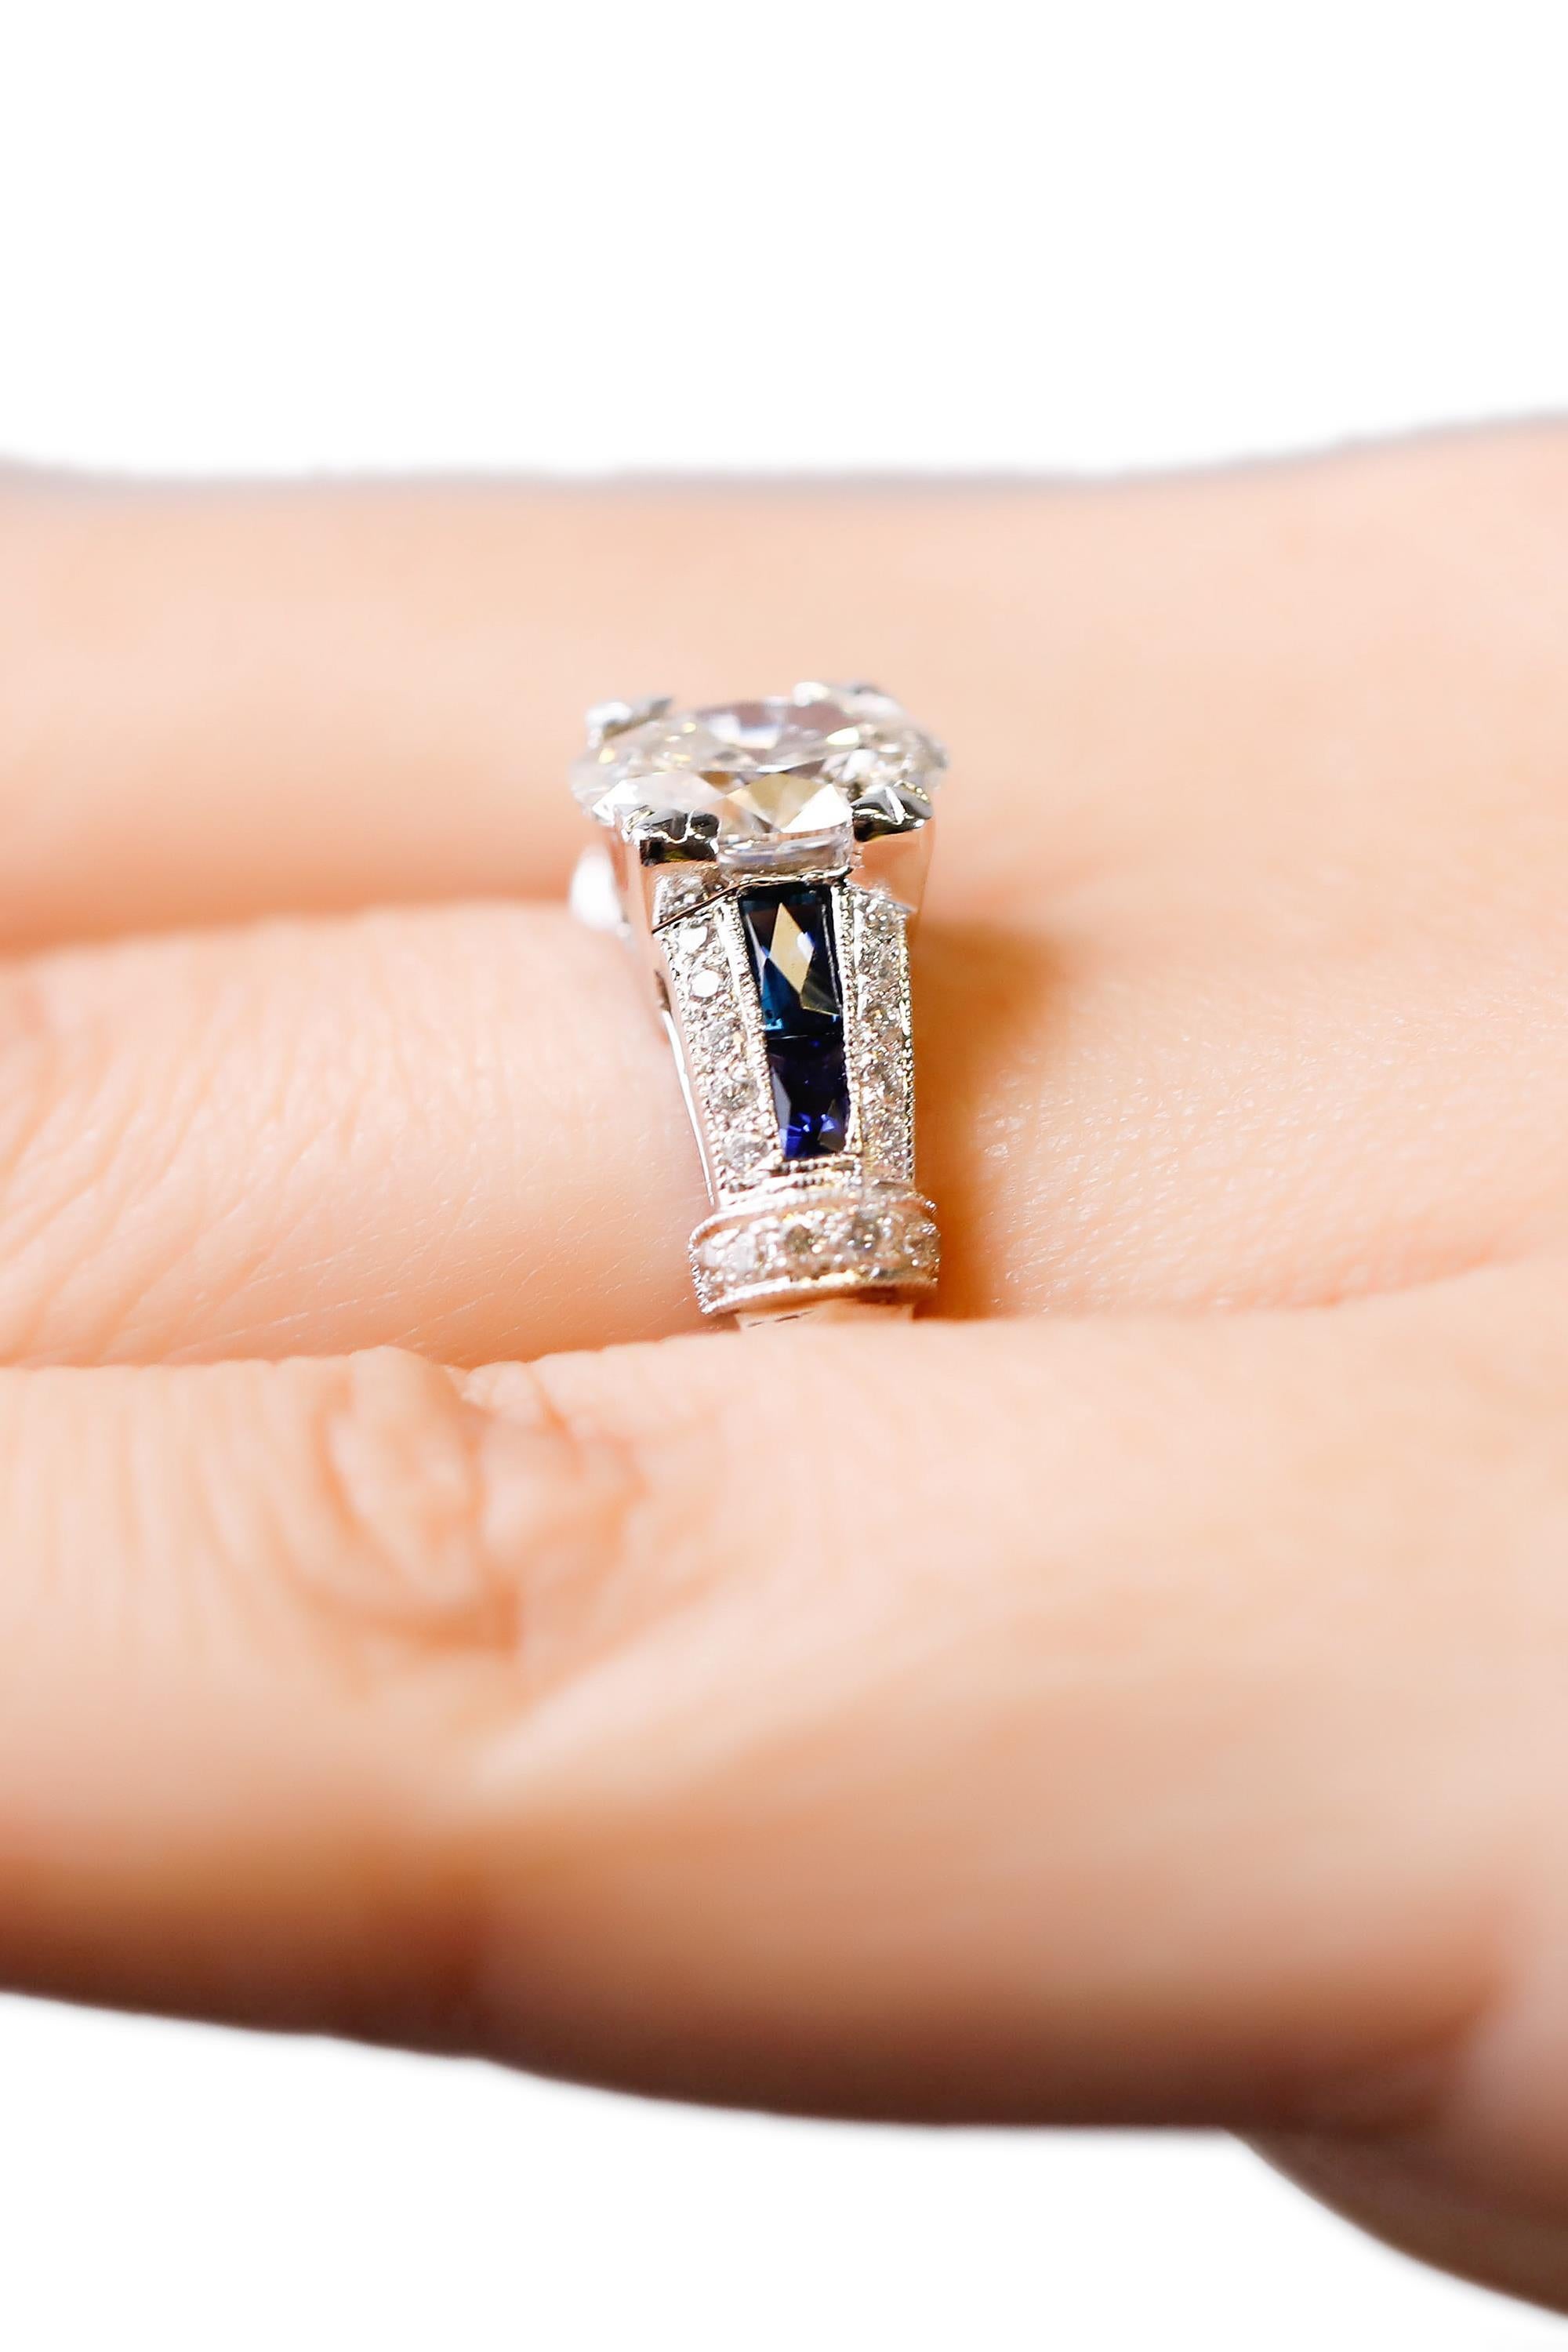 1.41 Carat Diamond 0.42ct Blue Sapphire 18 Karat White Gold Fine Ring Engagement For Sale 1